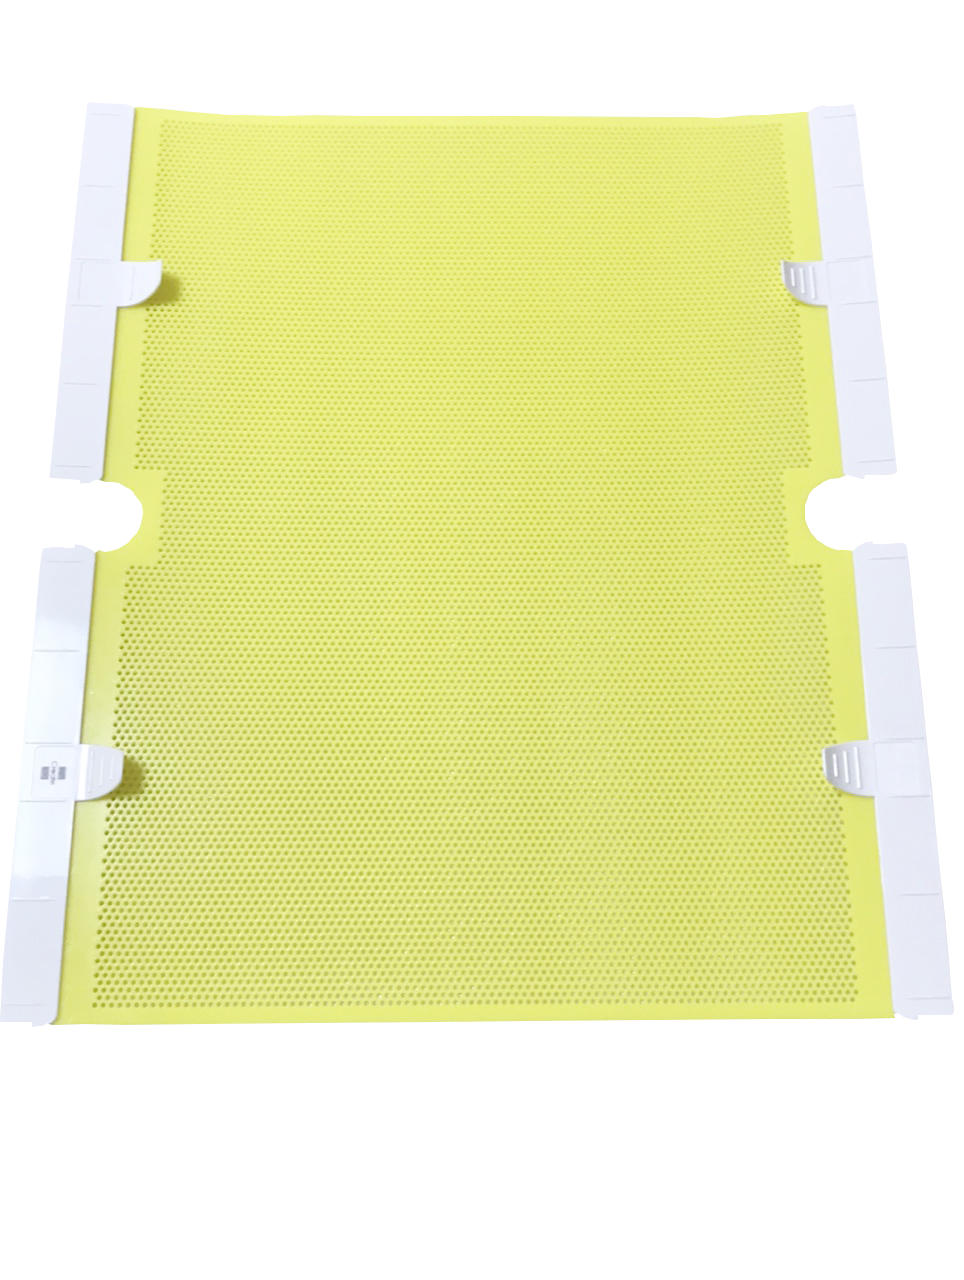 Termoplástico ortescótico amarillo de alto sellado para soporte